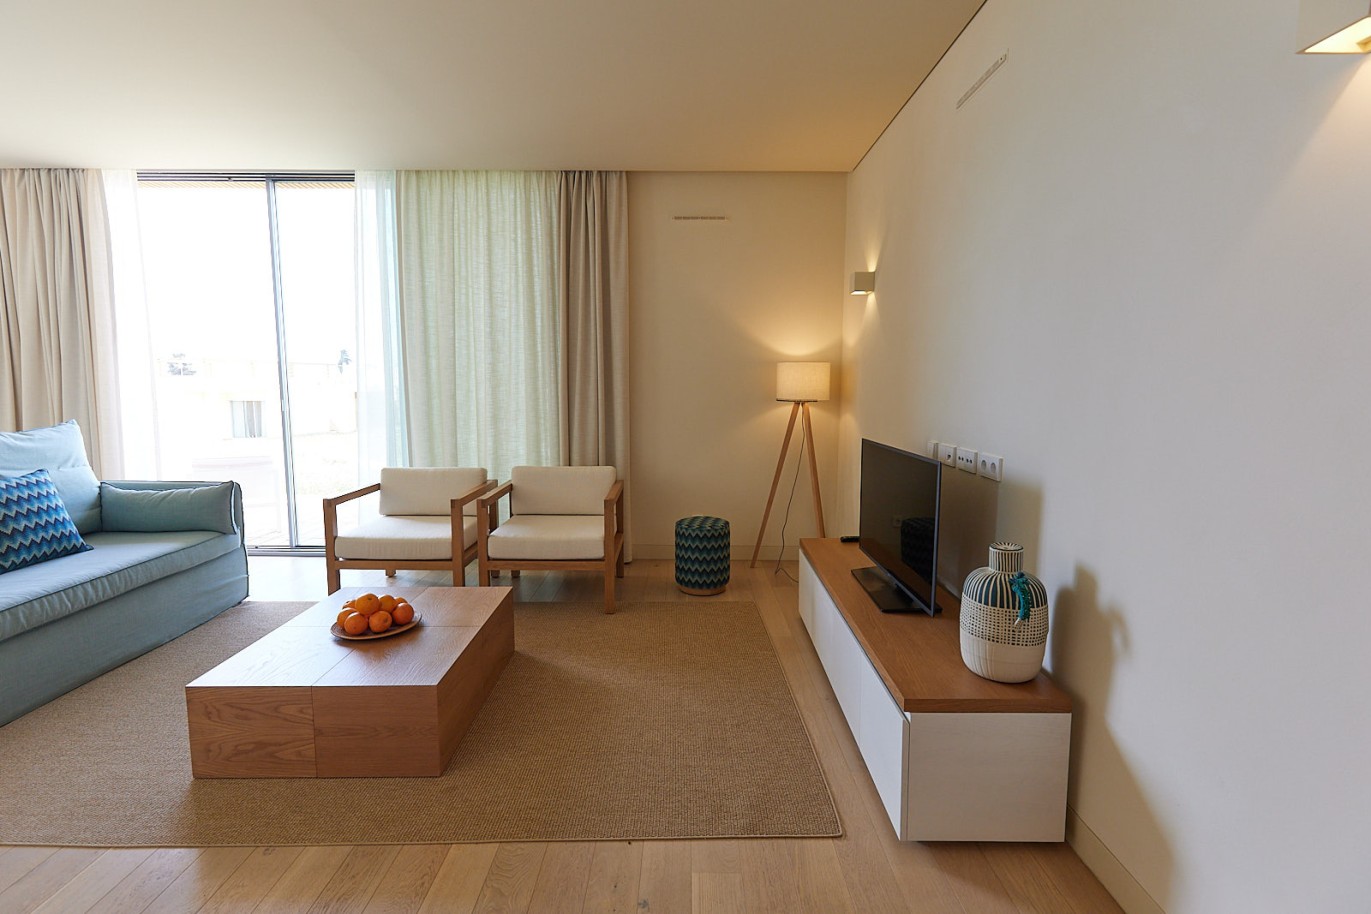 2 bedroom apartment in resort, for sale in Porches, Algarve_229194